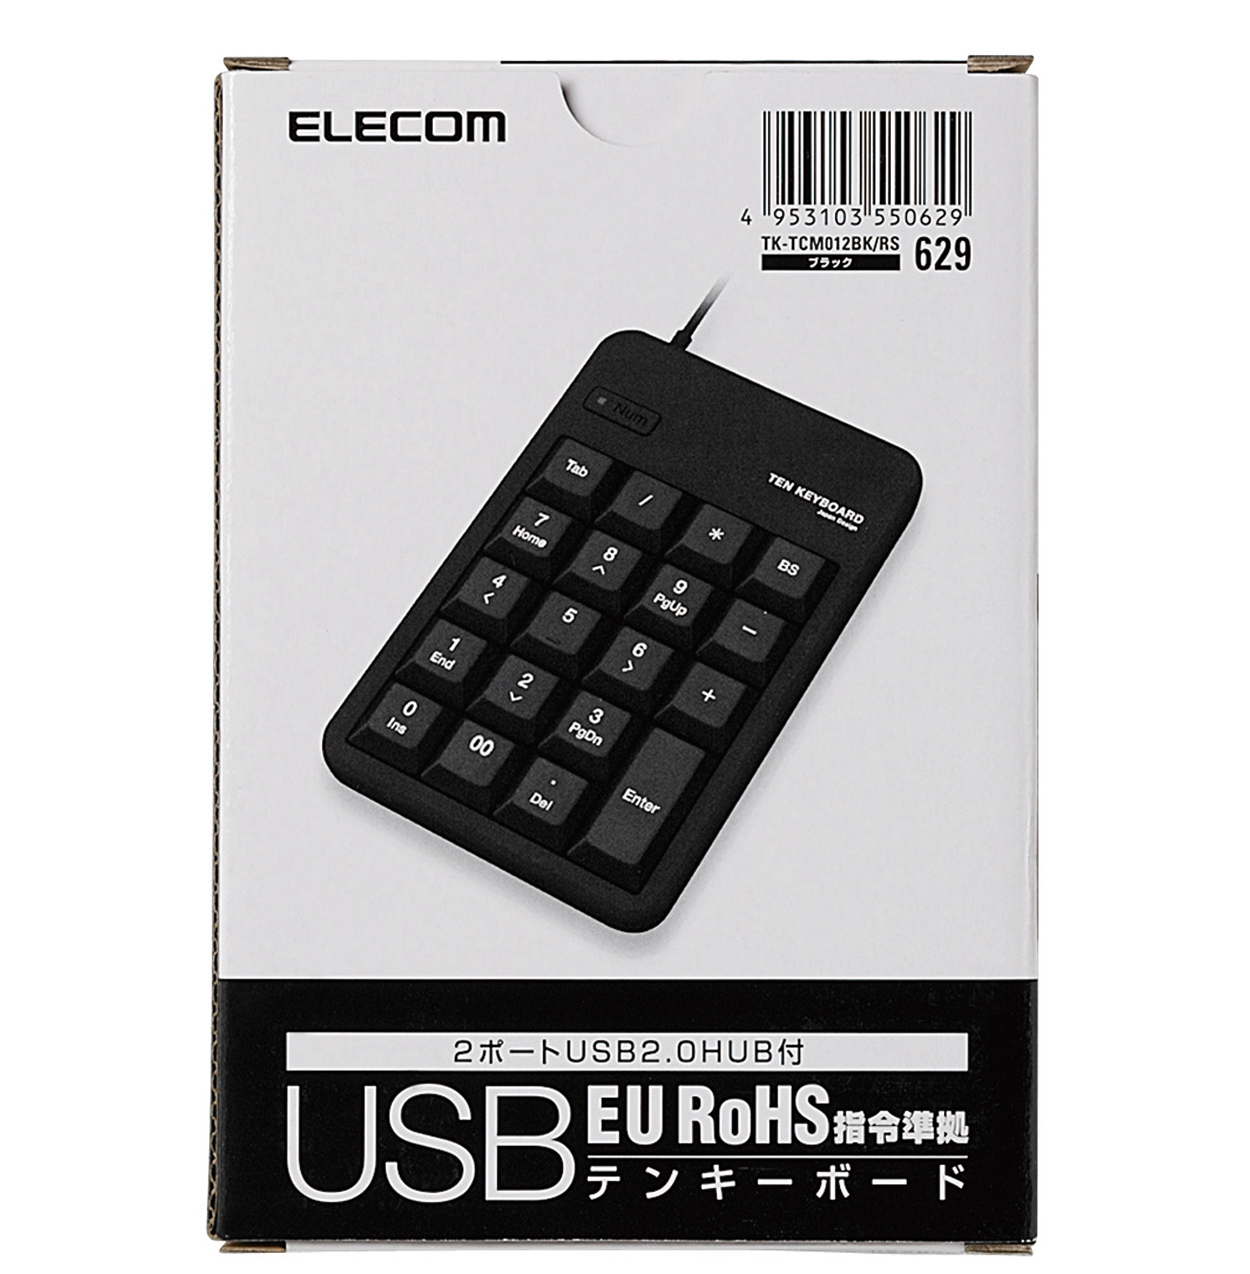 EU RoHS指令準拠USBハブ付テンキーボード | エレコムダイレクトショップ本店はPC周辺機器メーカー「ELECOM」の直営通販サイト